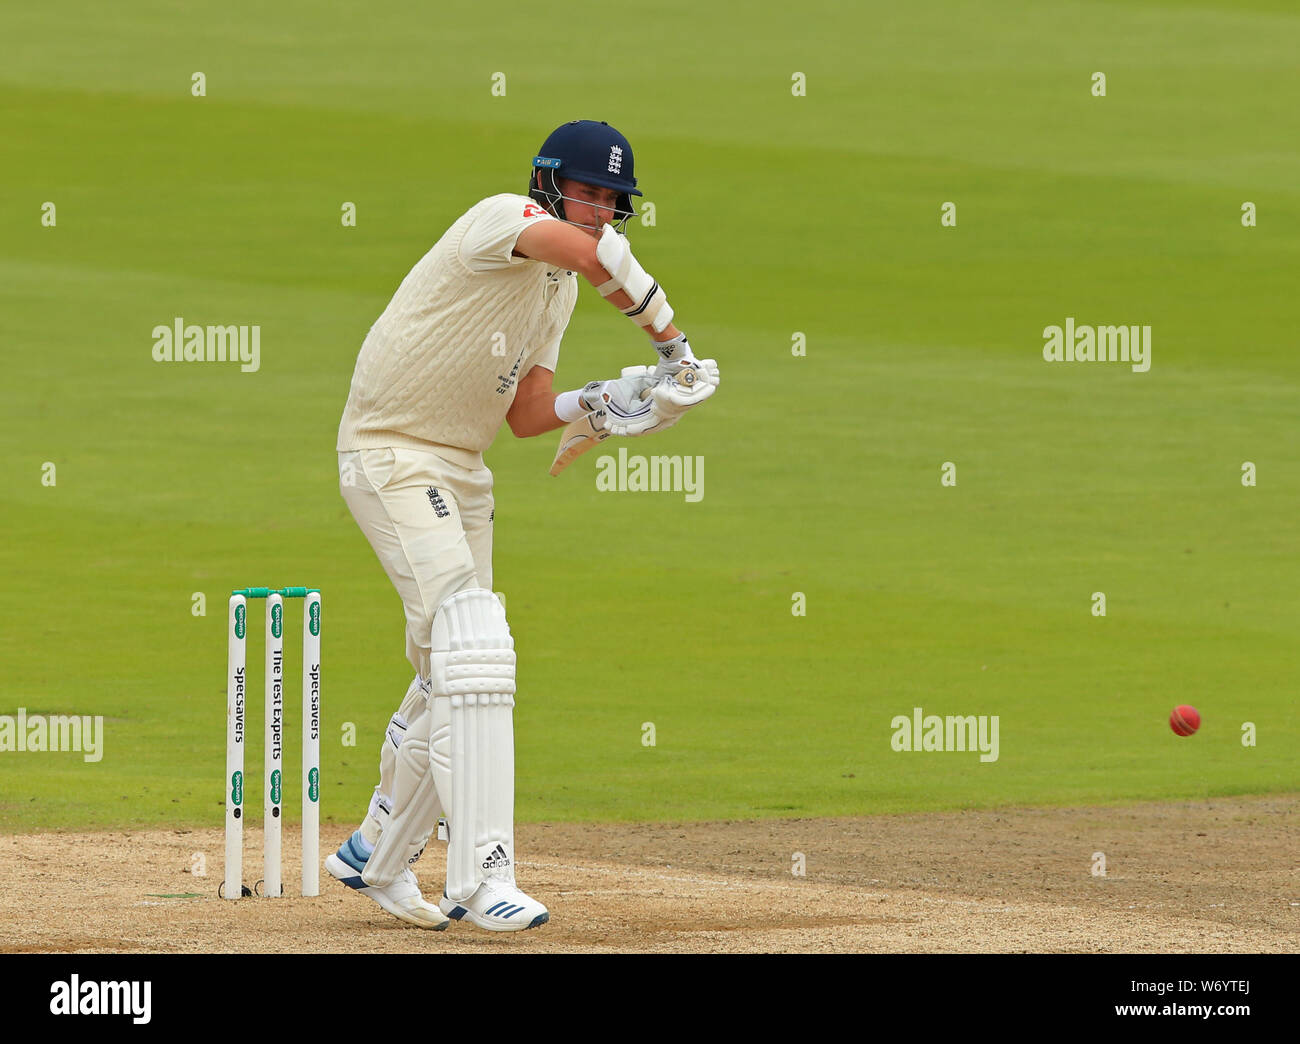 BIRMINGHAM, ENGLAND. 03 AUGUST 2019: Stuart Broad of England batting during day 3 of the 1st Specsavers Ashes Test match, at Edgbaston Cricket Ground, Birmingham, UK Stock Photo